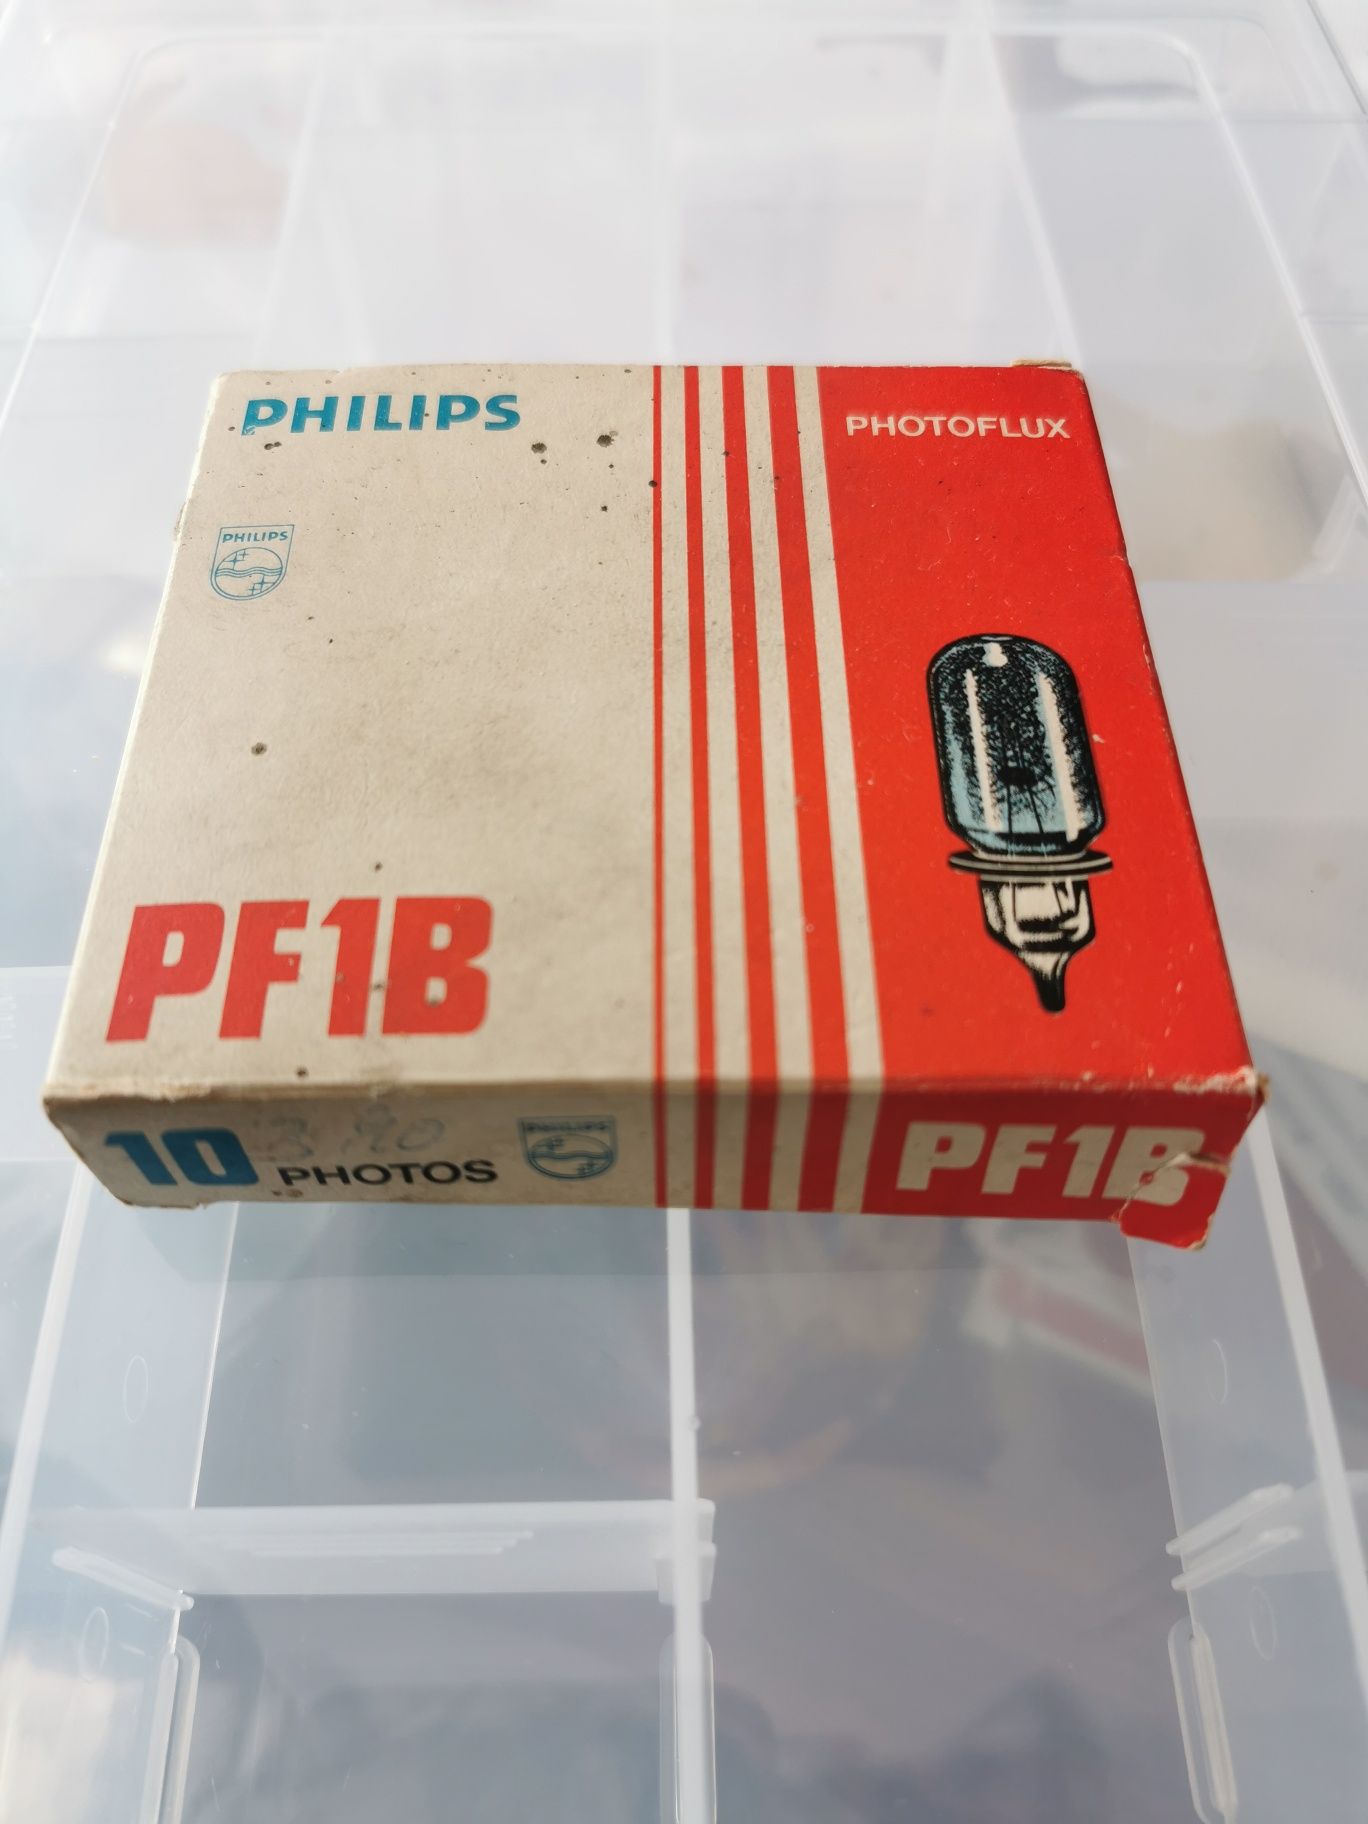 Żarówki Philips PF1B Photoflux